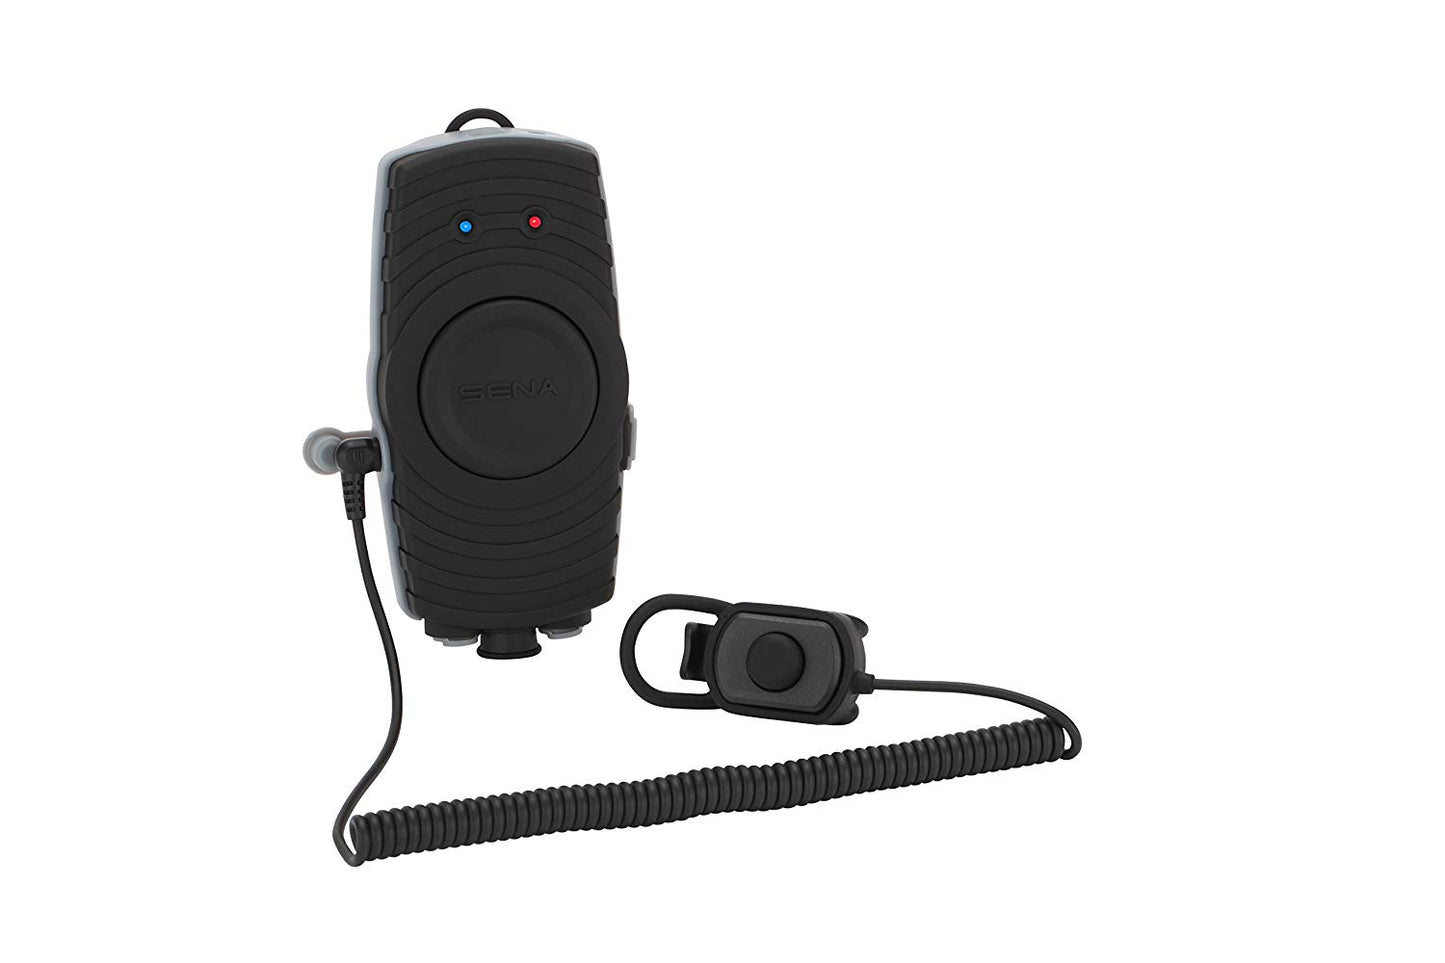 SENA Sr10 Adaptateur Pour Radio Bidirectionnelle Bluetooth